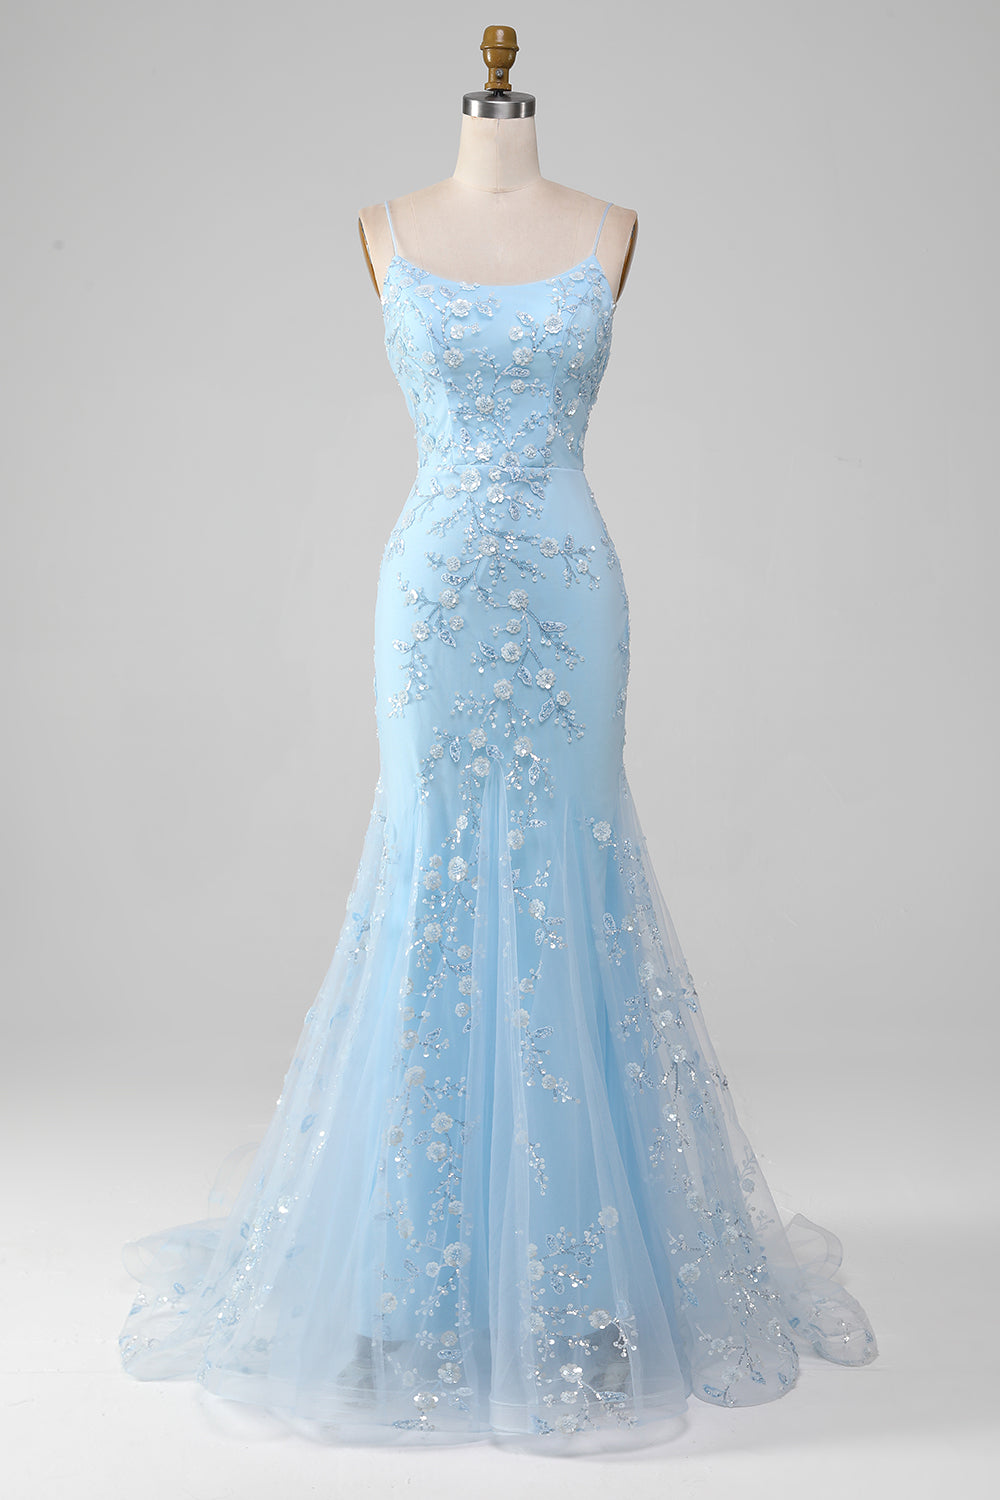 Zapakasa Women Sparkly Light Blue Beaded Mermaid Long Prom Dress ...